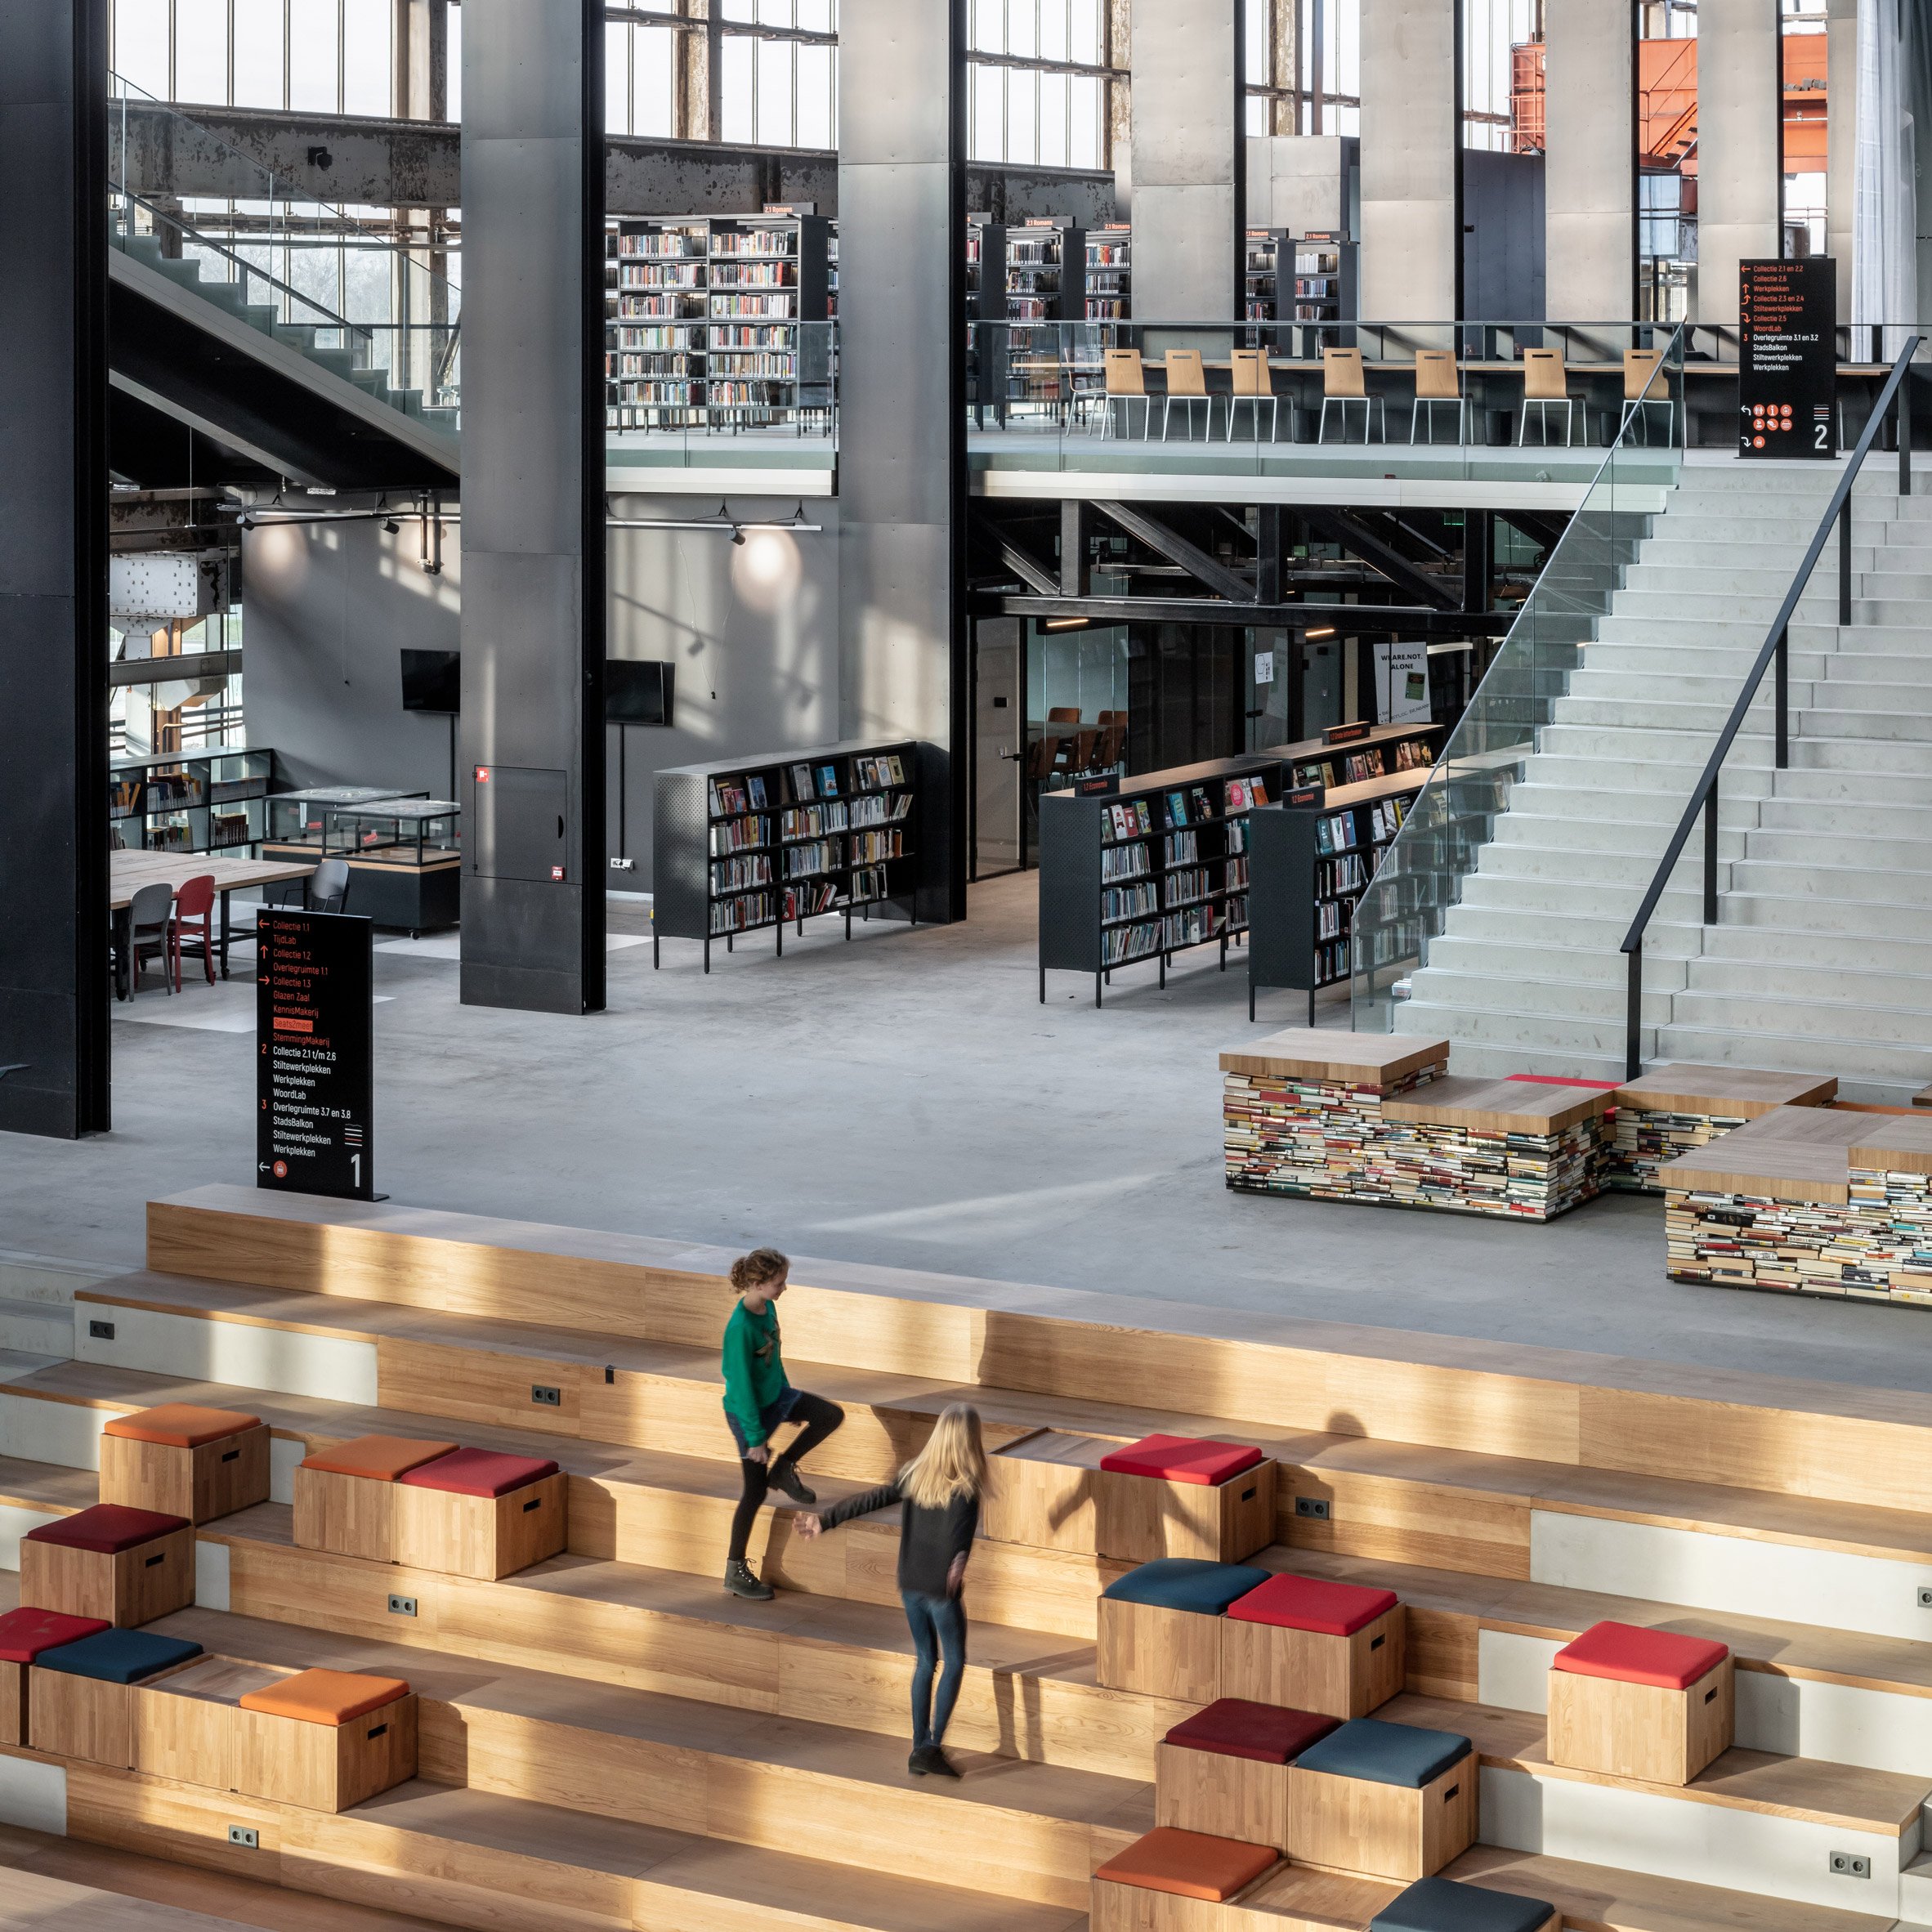 Lochal Tilburg Library Interiors Architecture Adaptive Reuse Netherlands Civic Dezeen Sq 1 